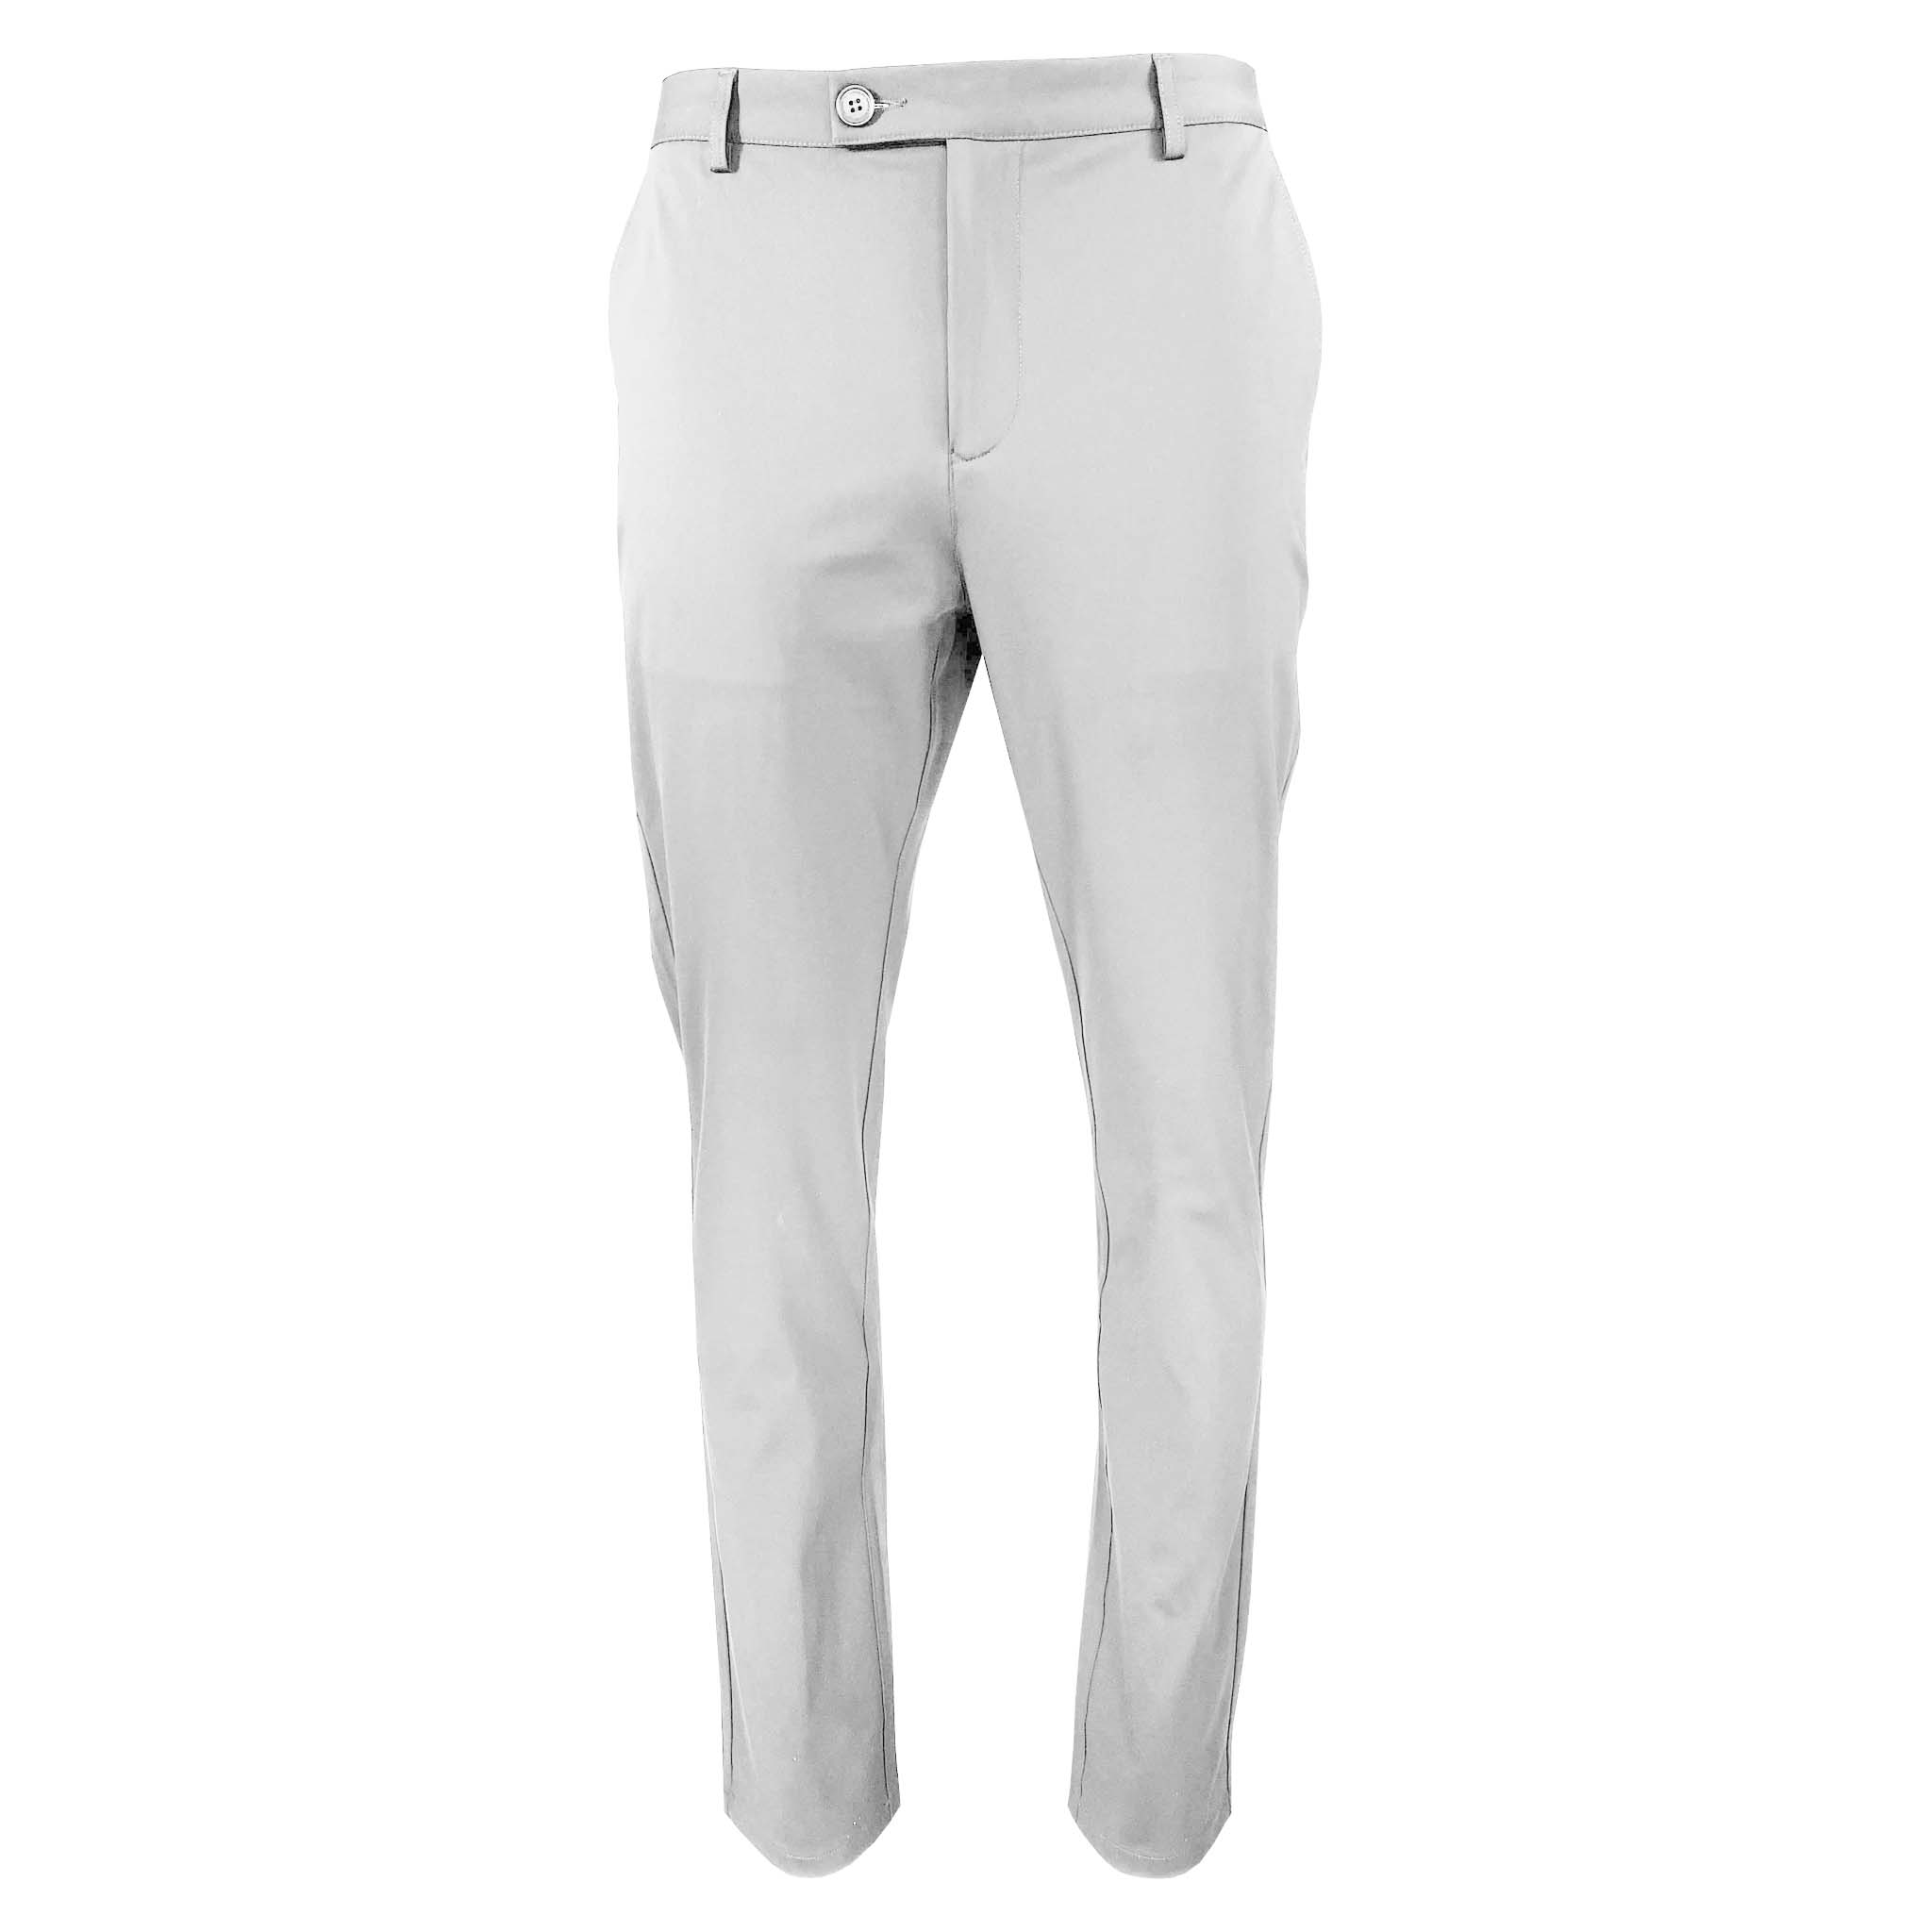 Puma Jackpot Pants Mens Golf Trousers - Bright White - New 2022 - Choose  Size | eBay